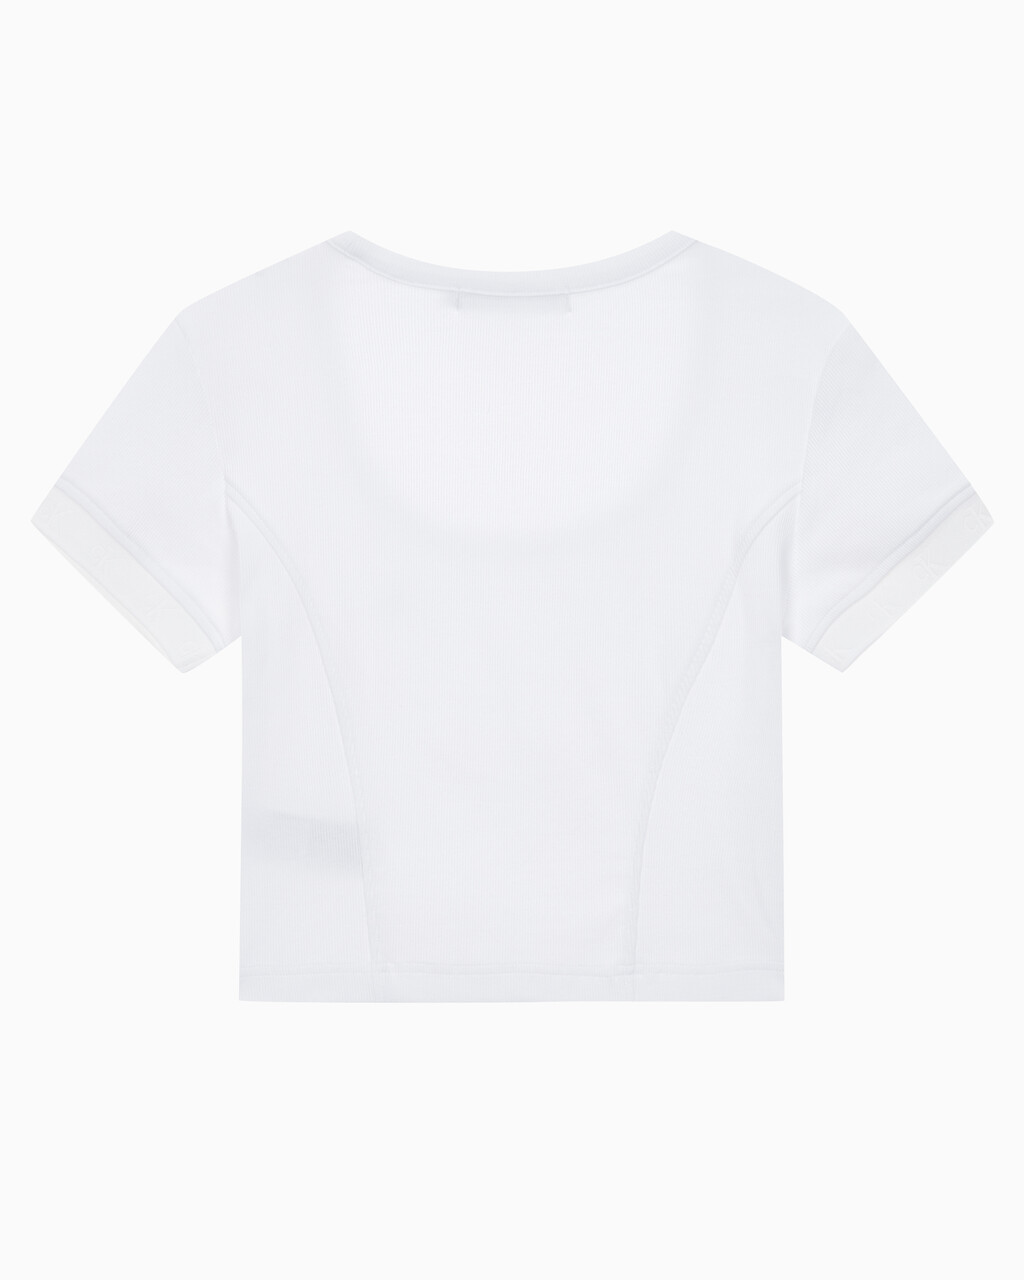 Buy 여성 엠보스 로고 U넥 크롭 반팔 티셔츠 in color BRIGHT WHITE